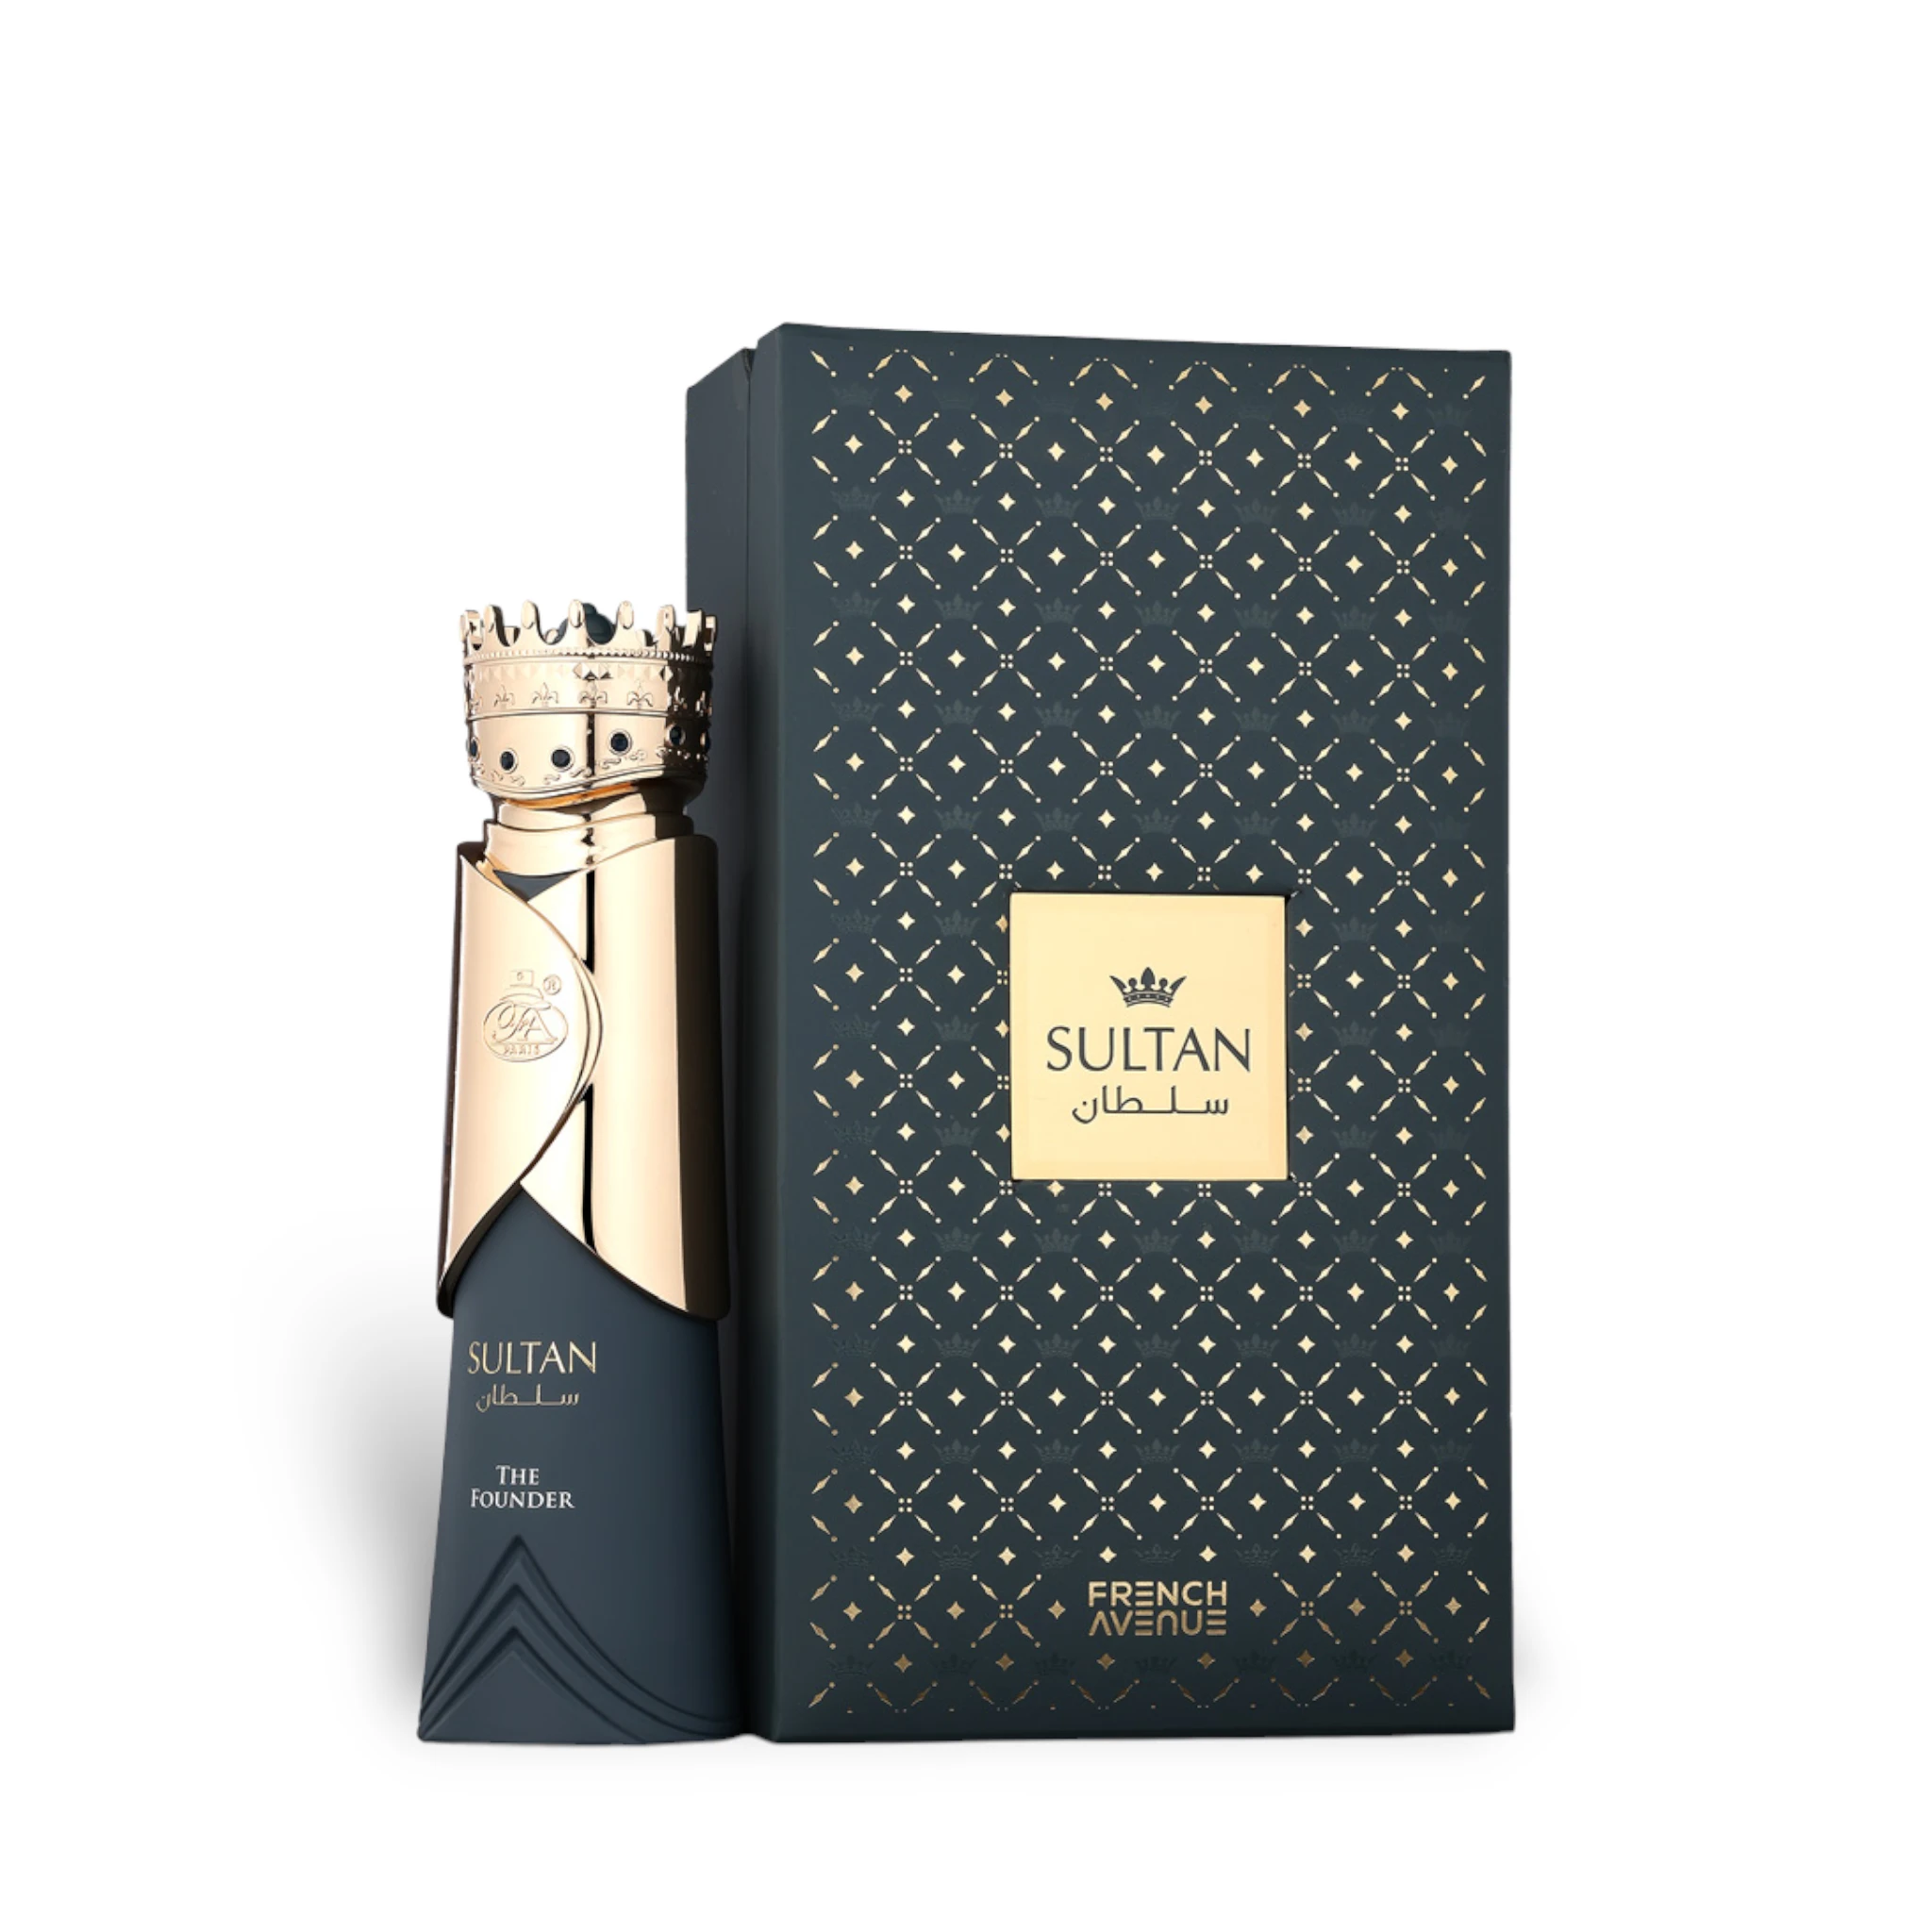 Sultan The Founder Perfume Eau De Parfum By Fa Paris French Avenue (Fragrance World)